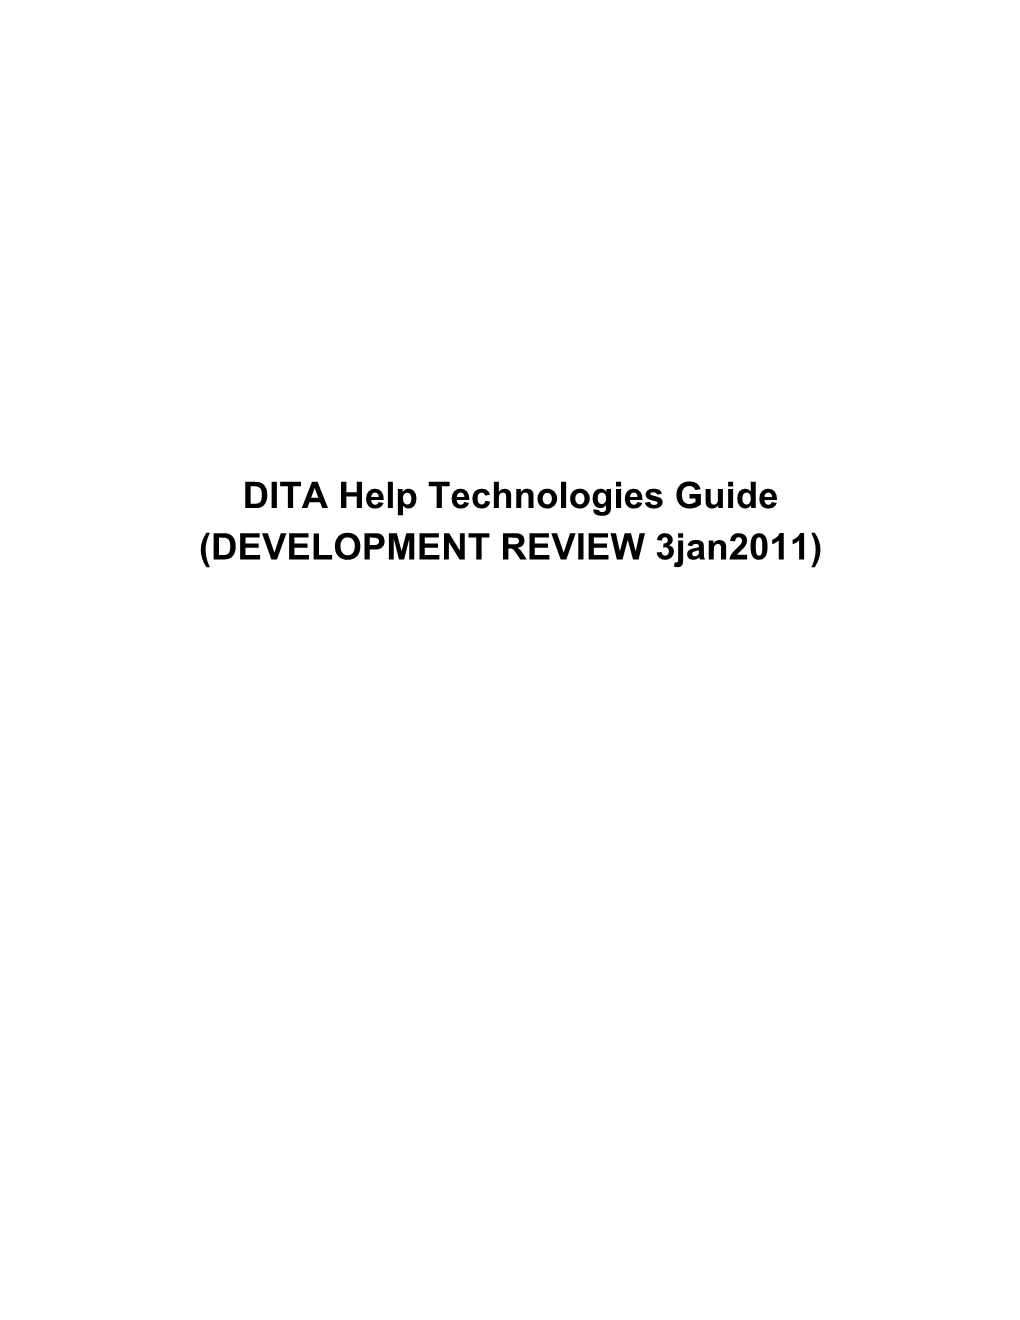 DITA Help Technologies Guide (DEVELOPMENT REVIEW 3Jan2011) 2 | Opentopic | TOC